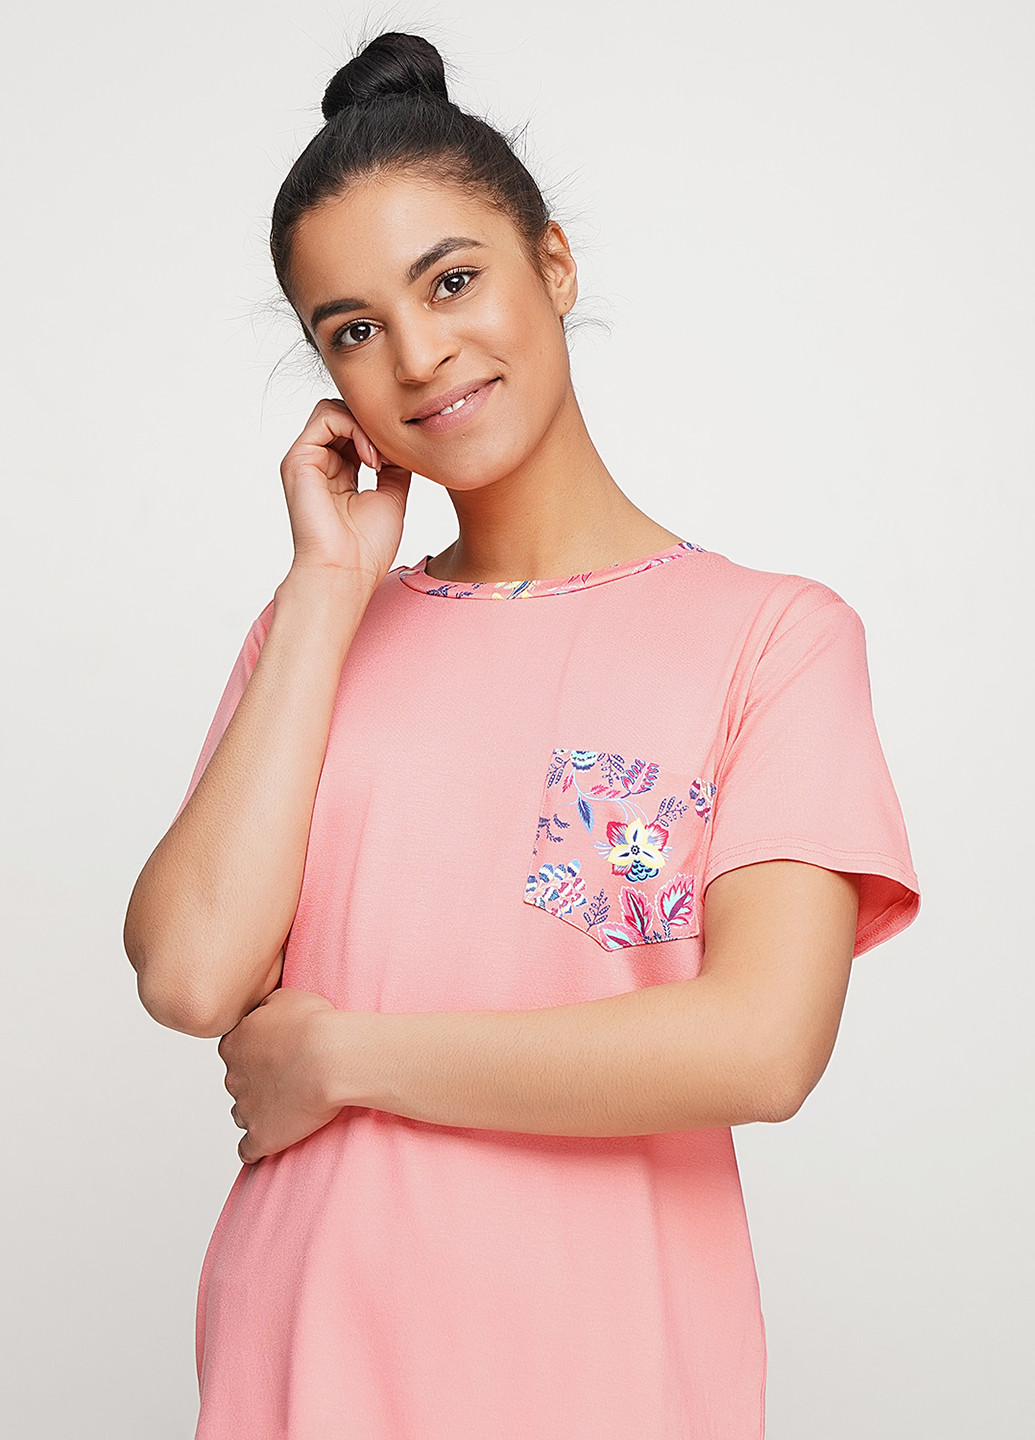 Розовая всесезон пижама (футболка, бриджи) футболка + бриджи Jhiva